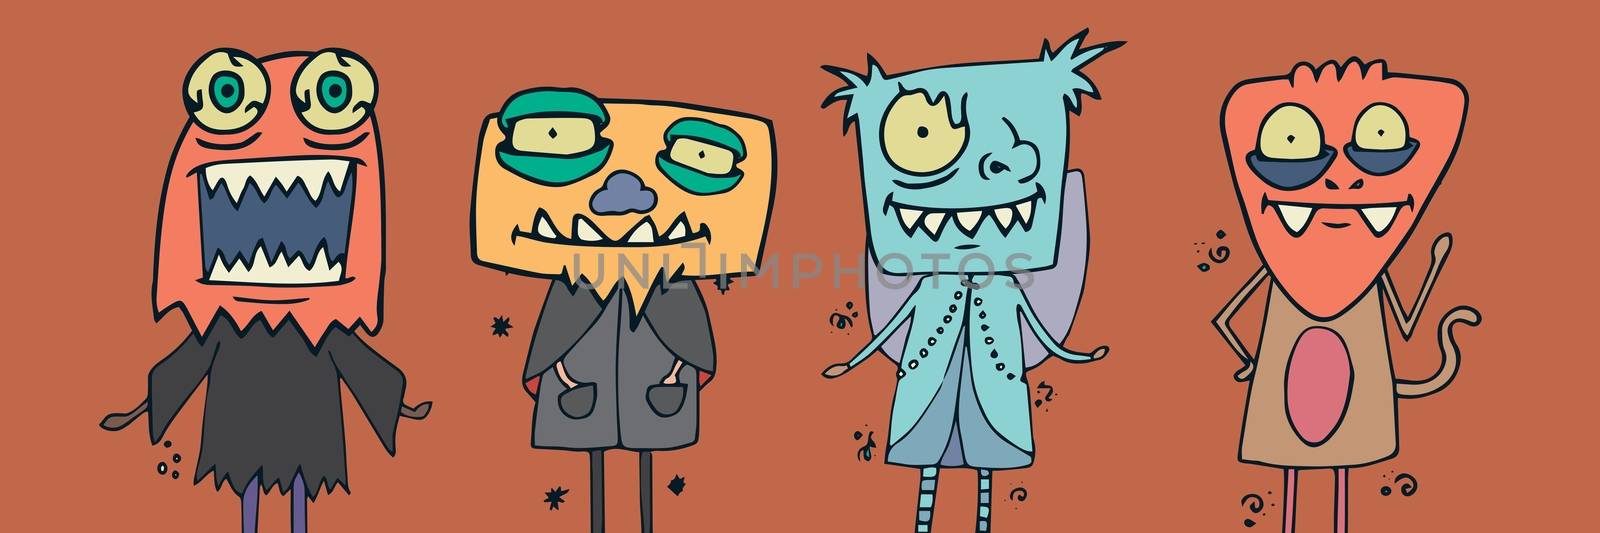 Monster illustrations in Halloween costumes by Wavebreakmedia